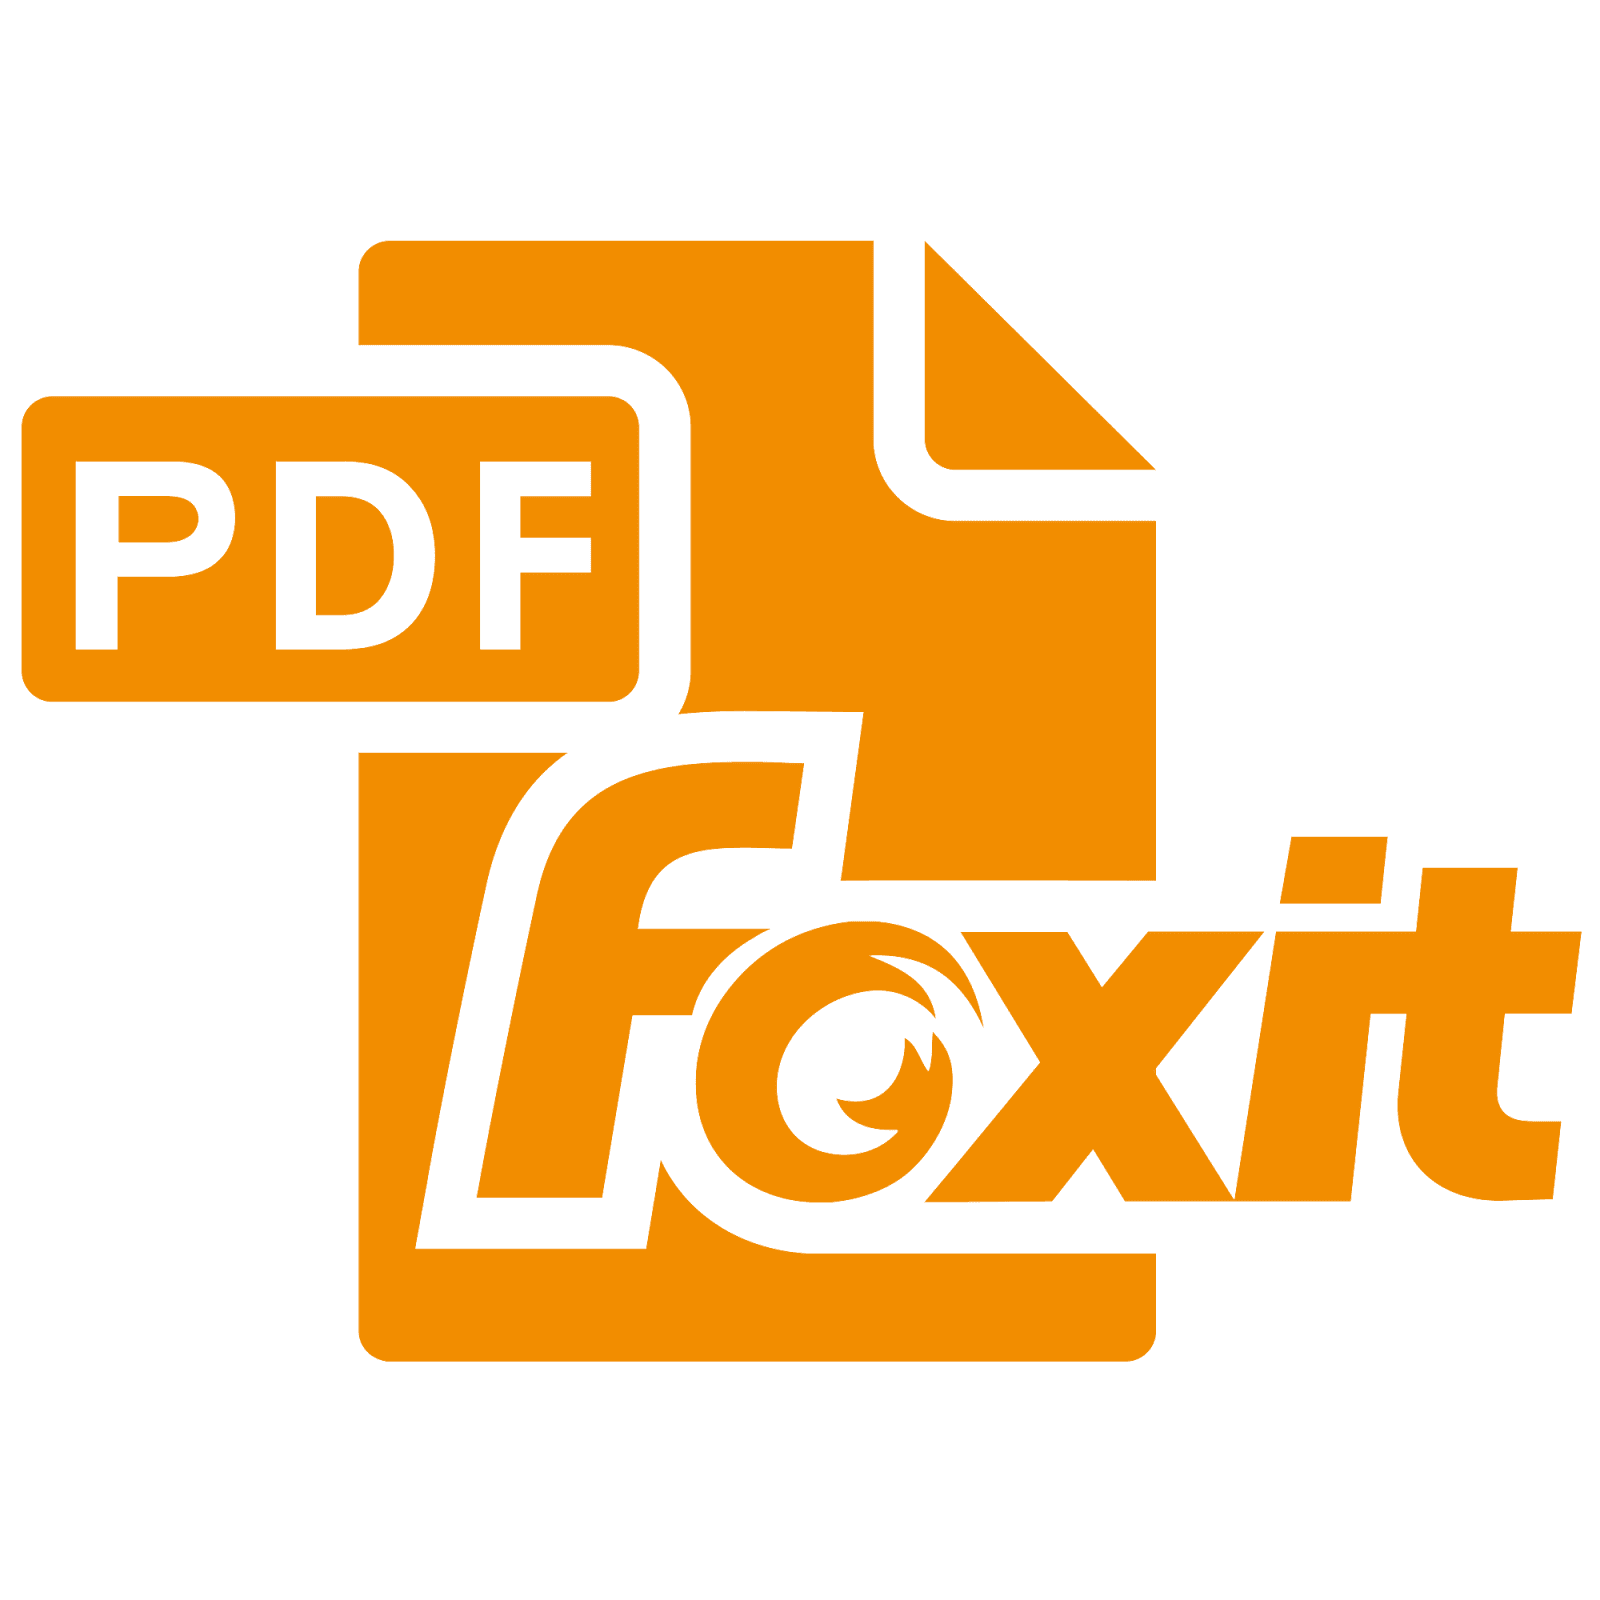 pdf software